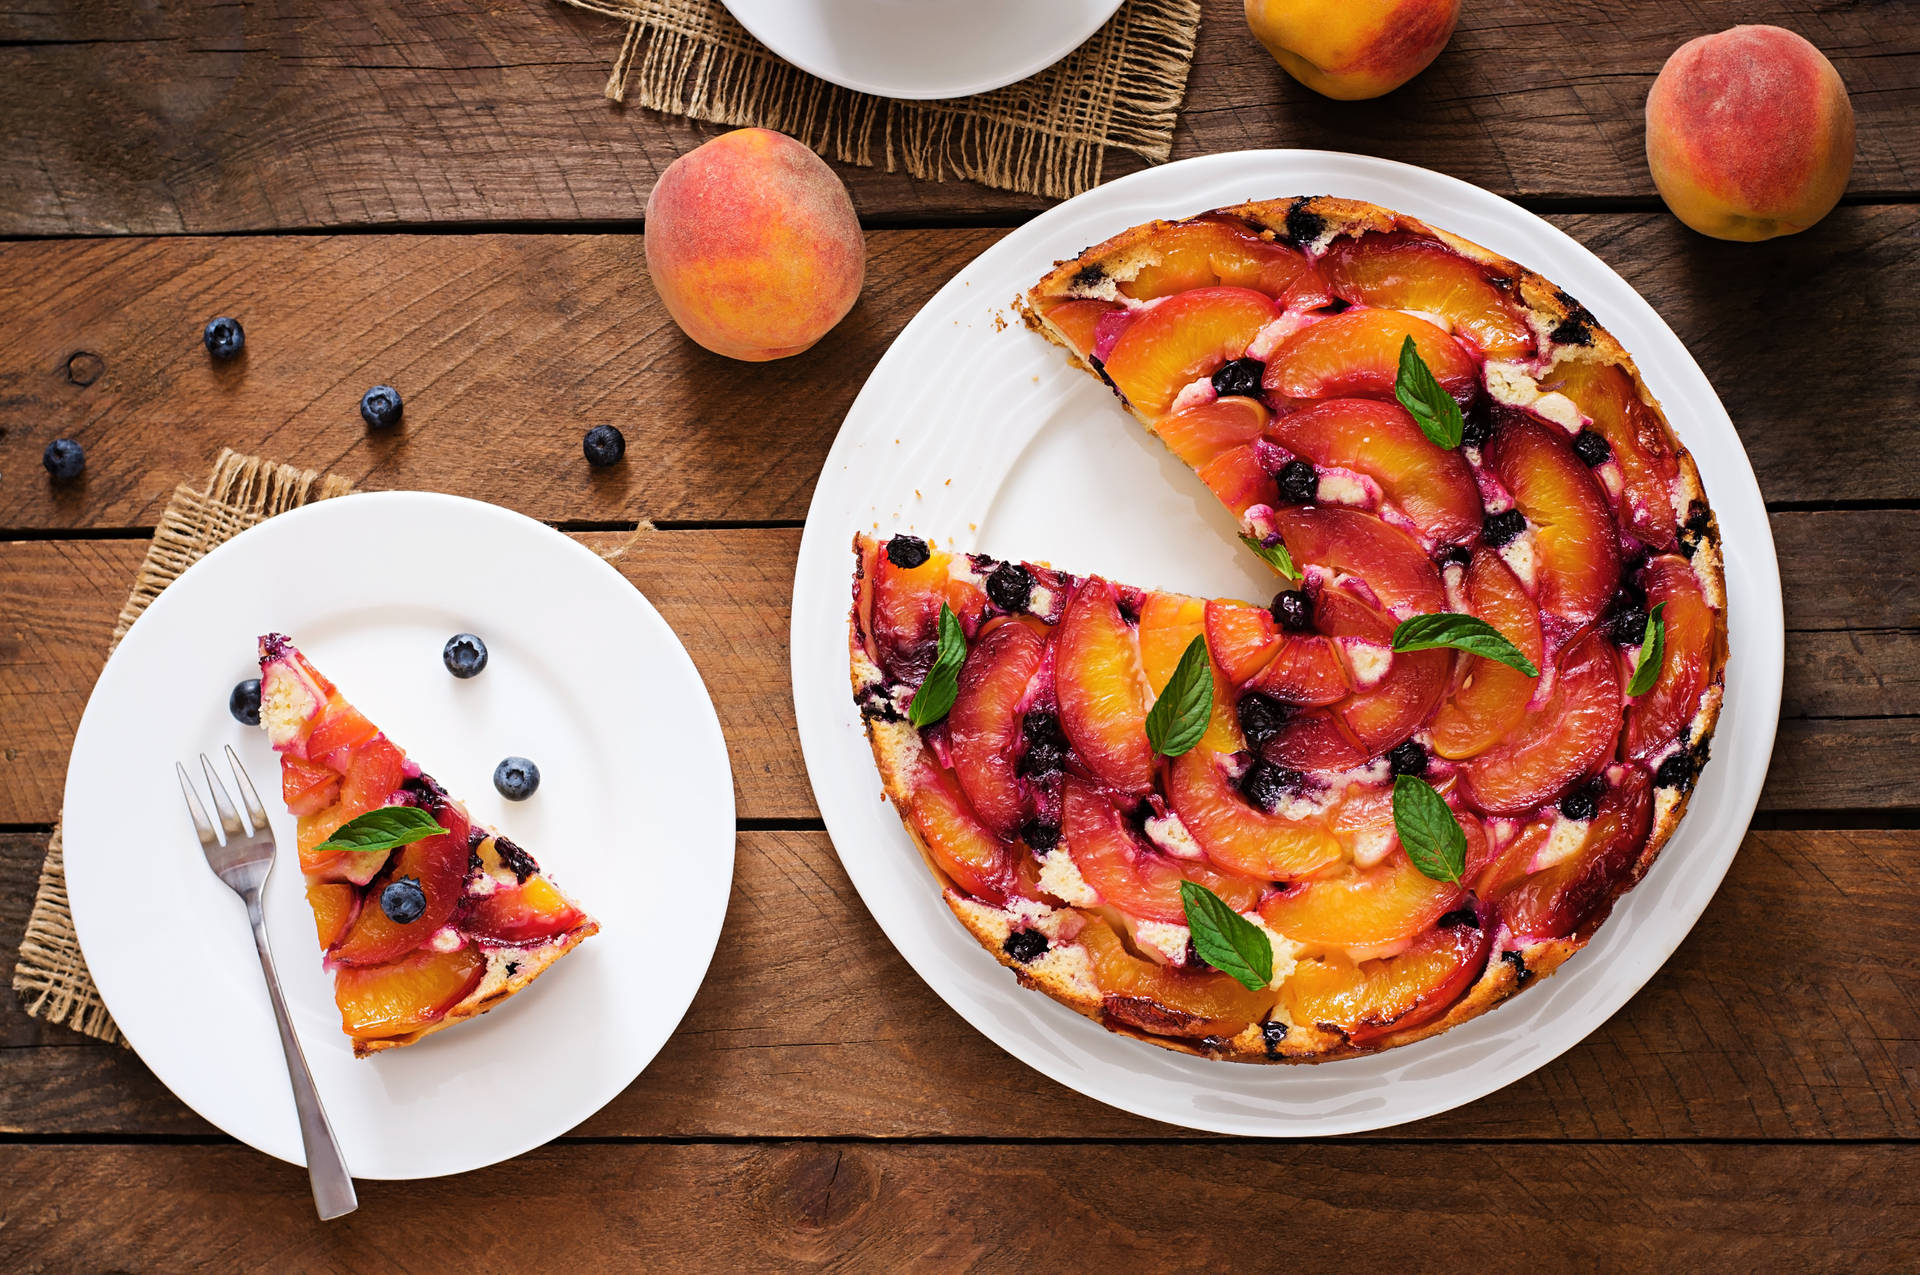 Tasty-looking Fruit Pie Background